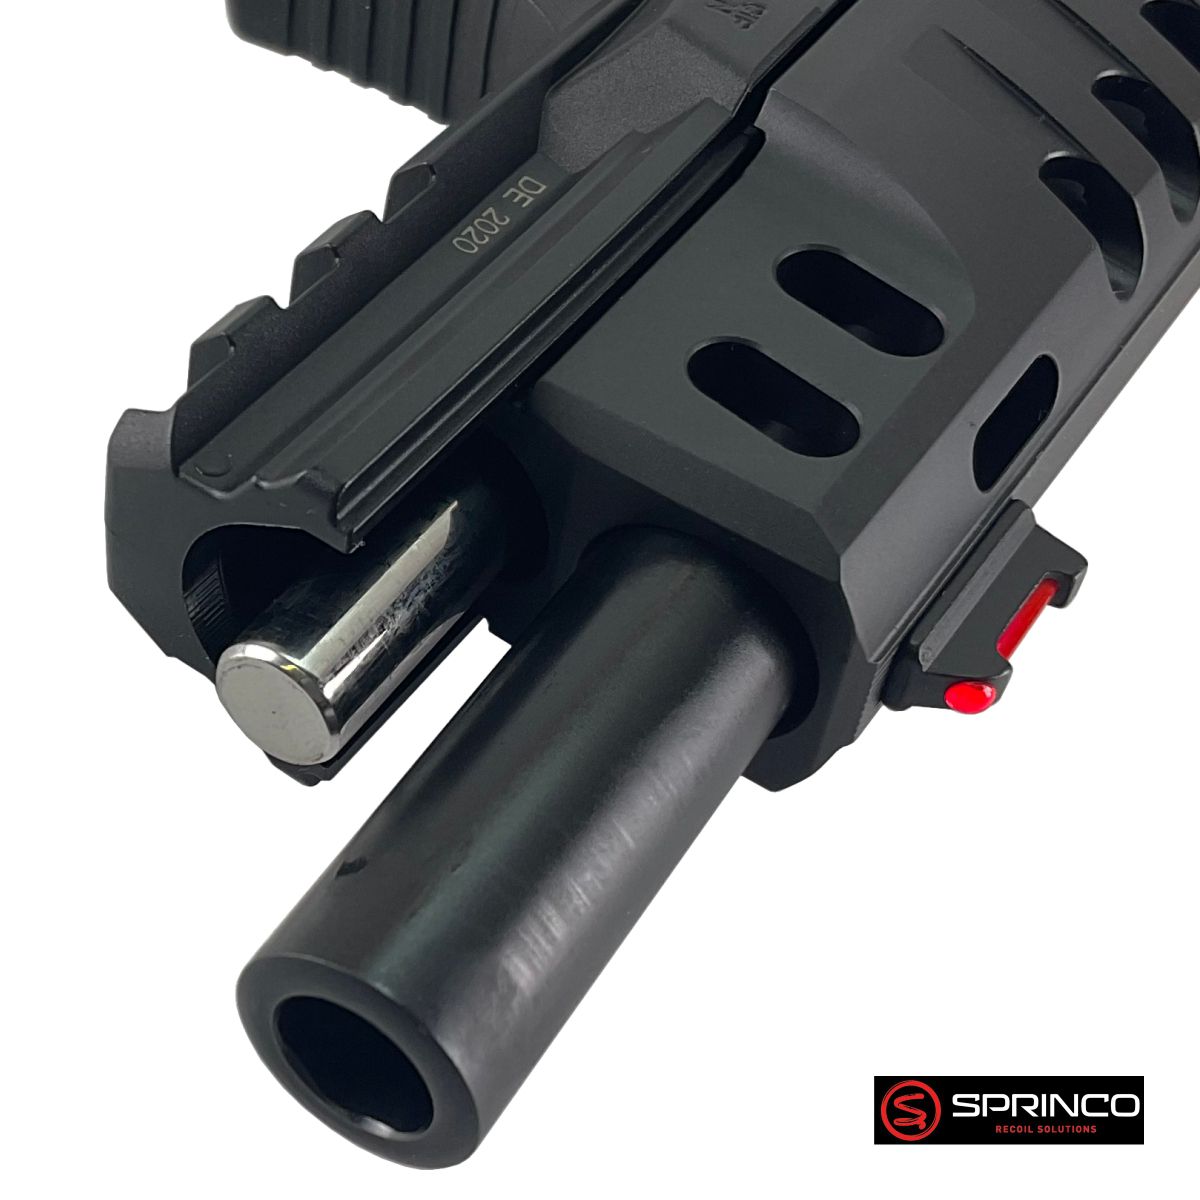 Sestava vratné pružiny Sprinco pro Walther PPQ/Q5 5